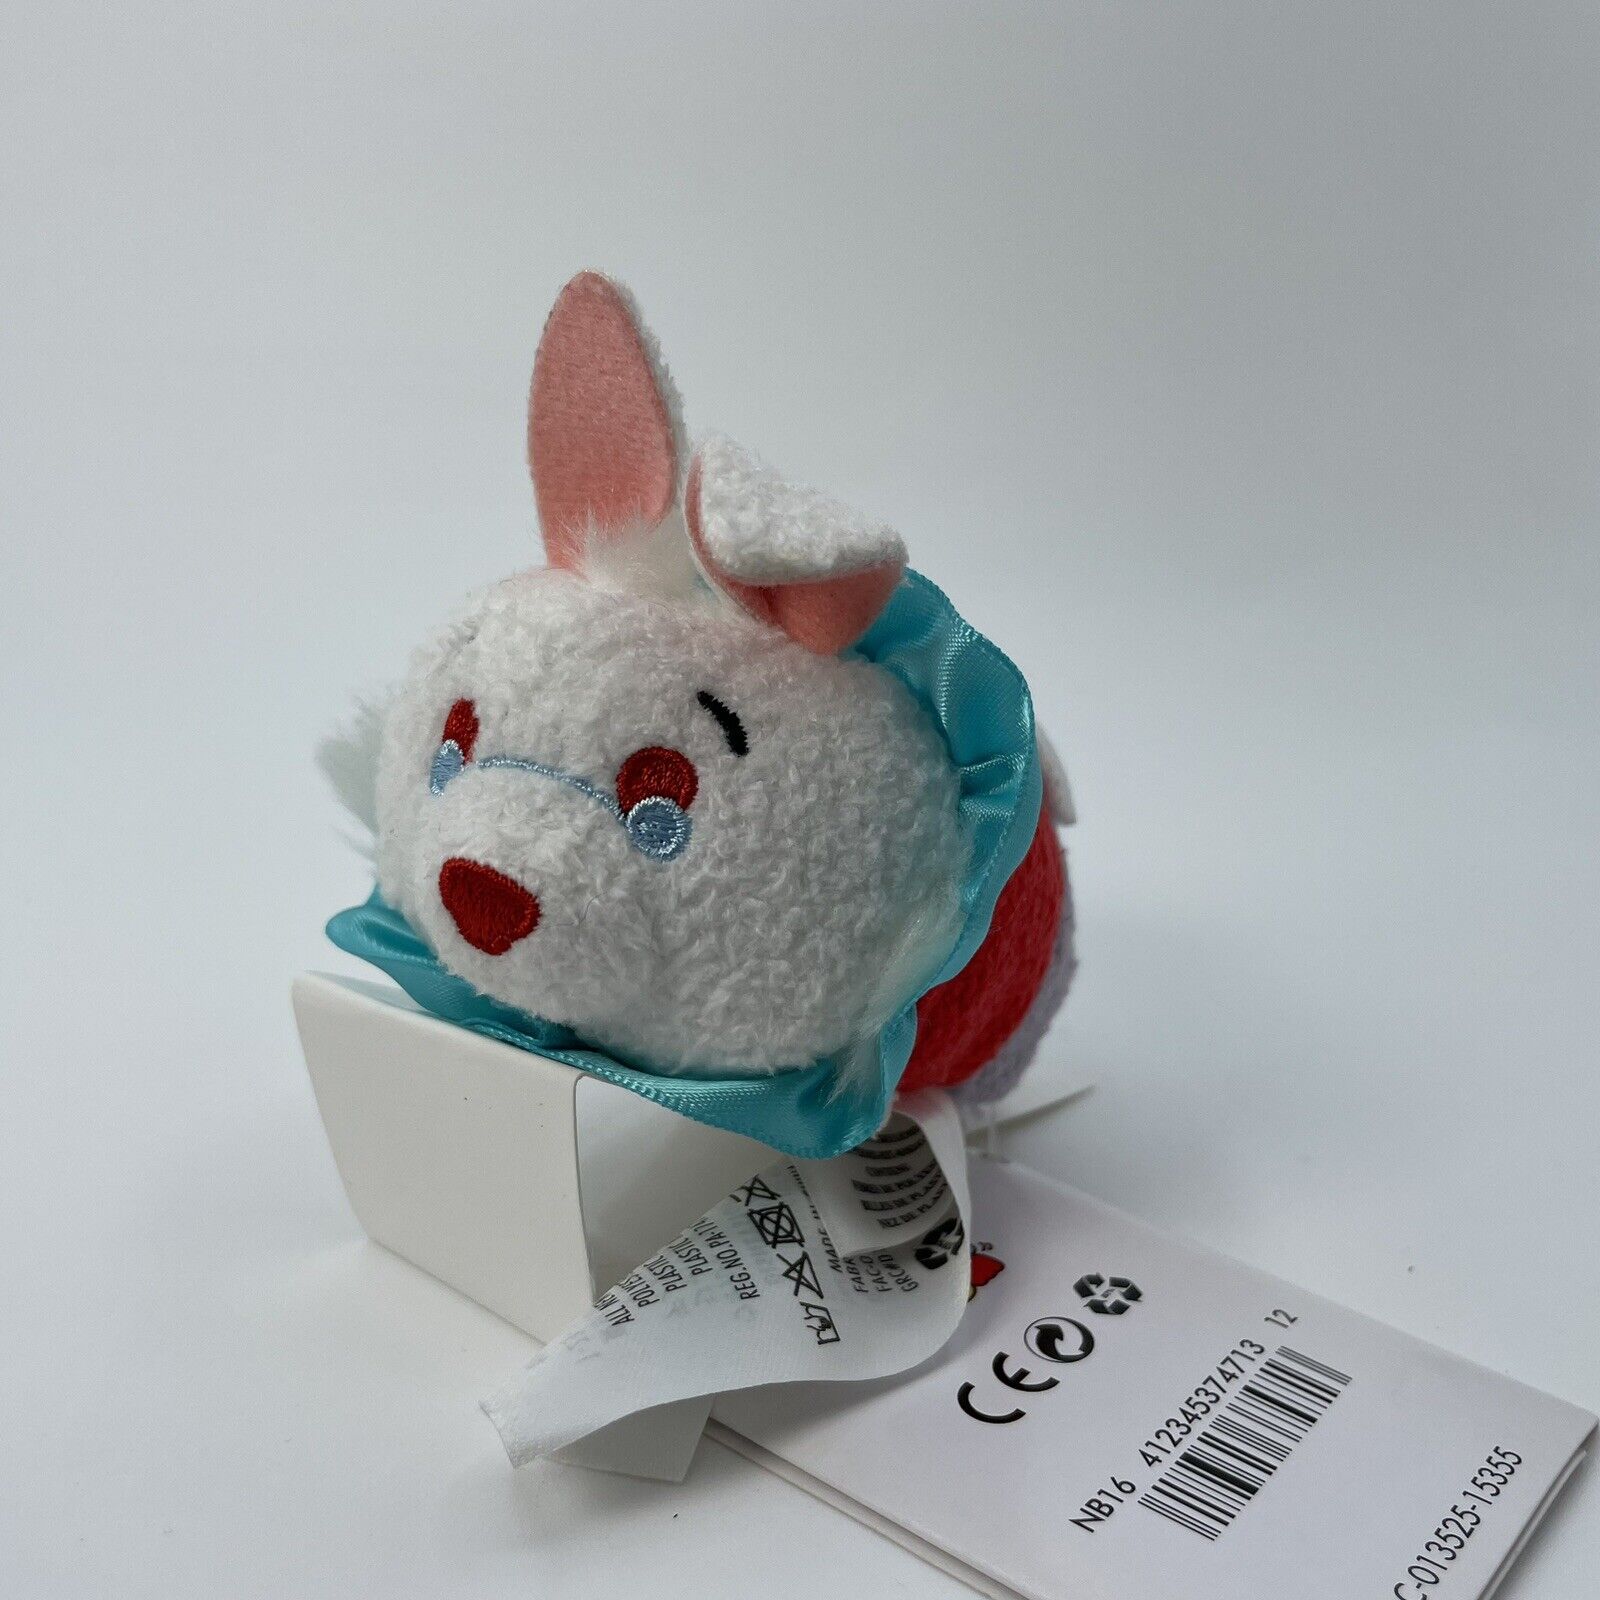 DIsney Tsum Tsum - Alice in Wonderland - White Rabbit